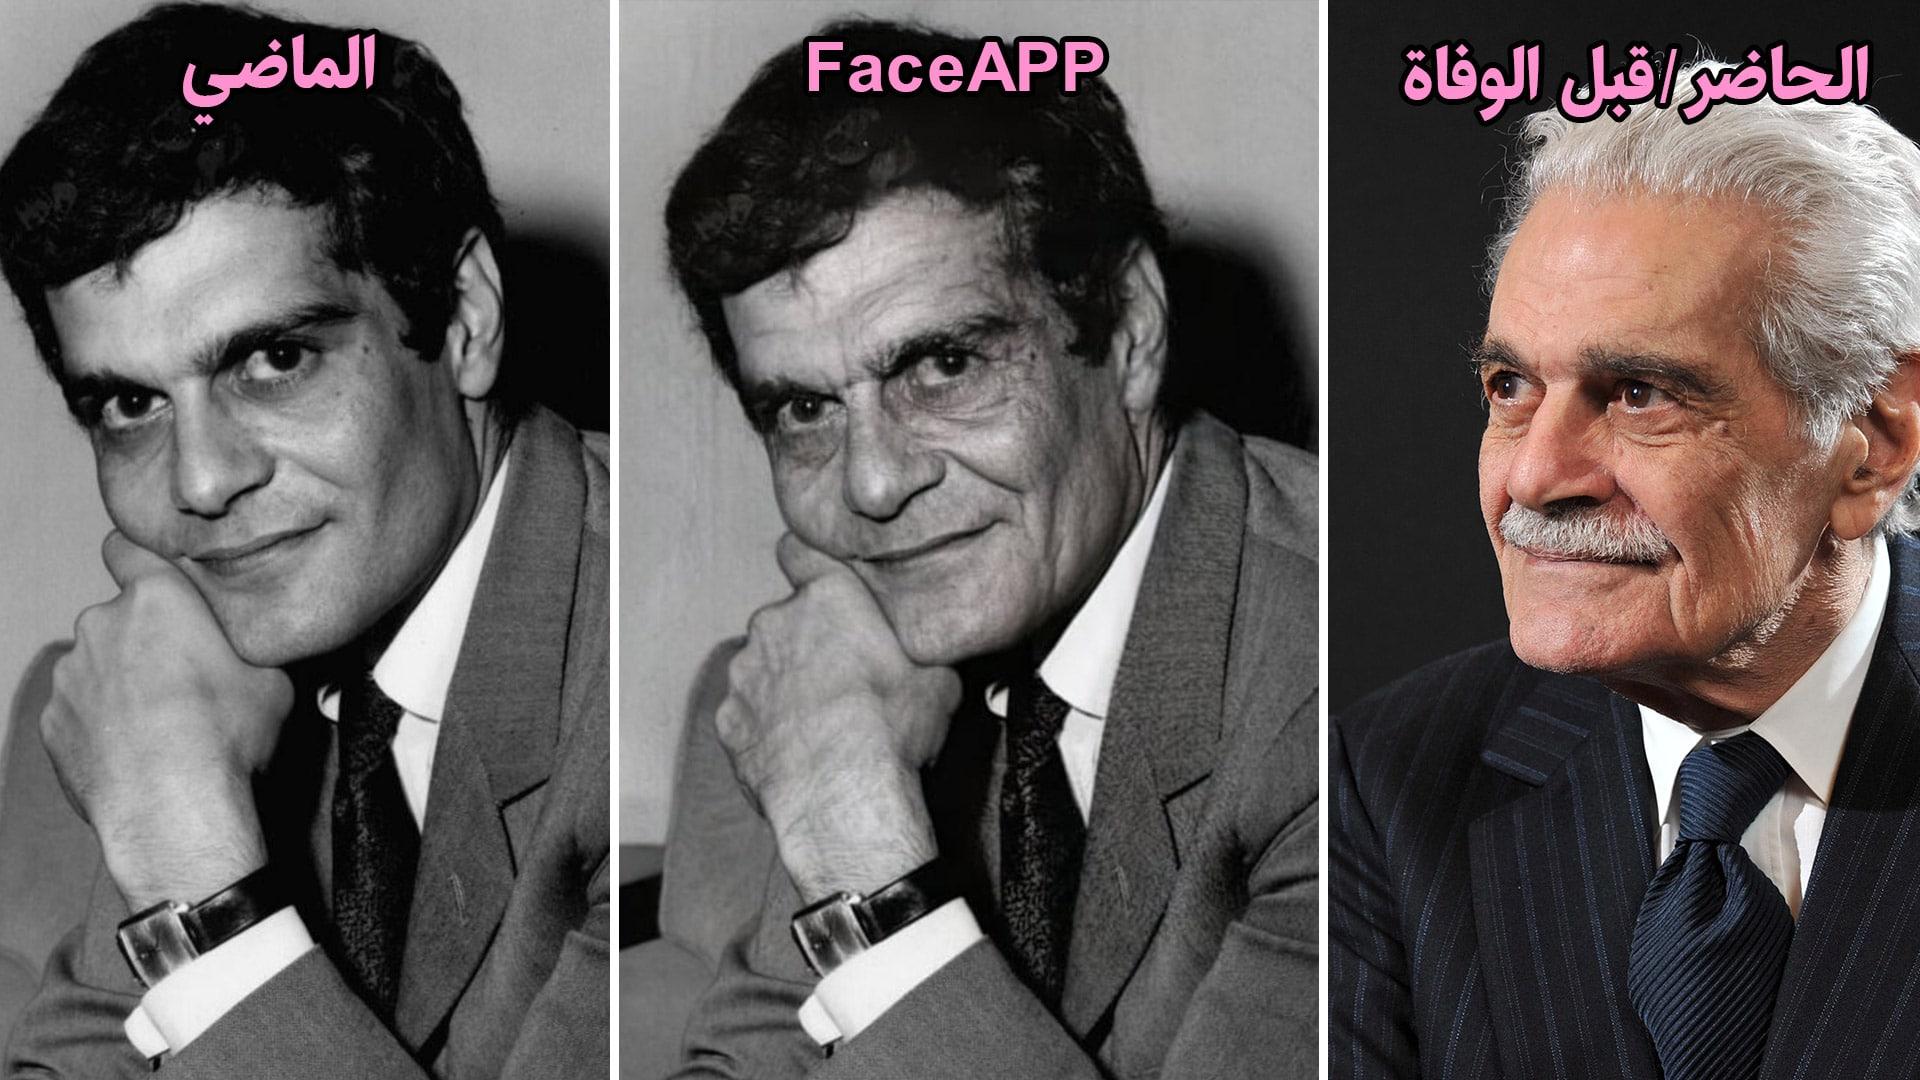 عمر الشريف - face app